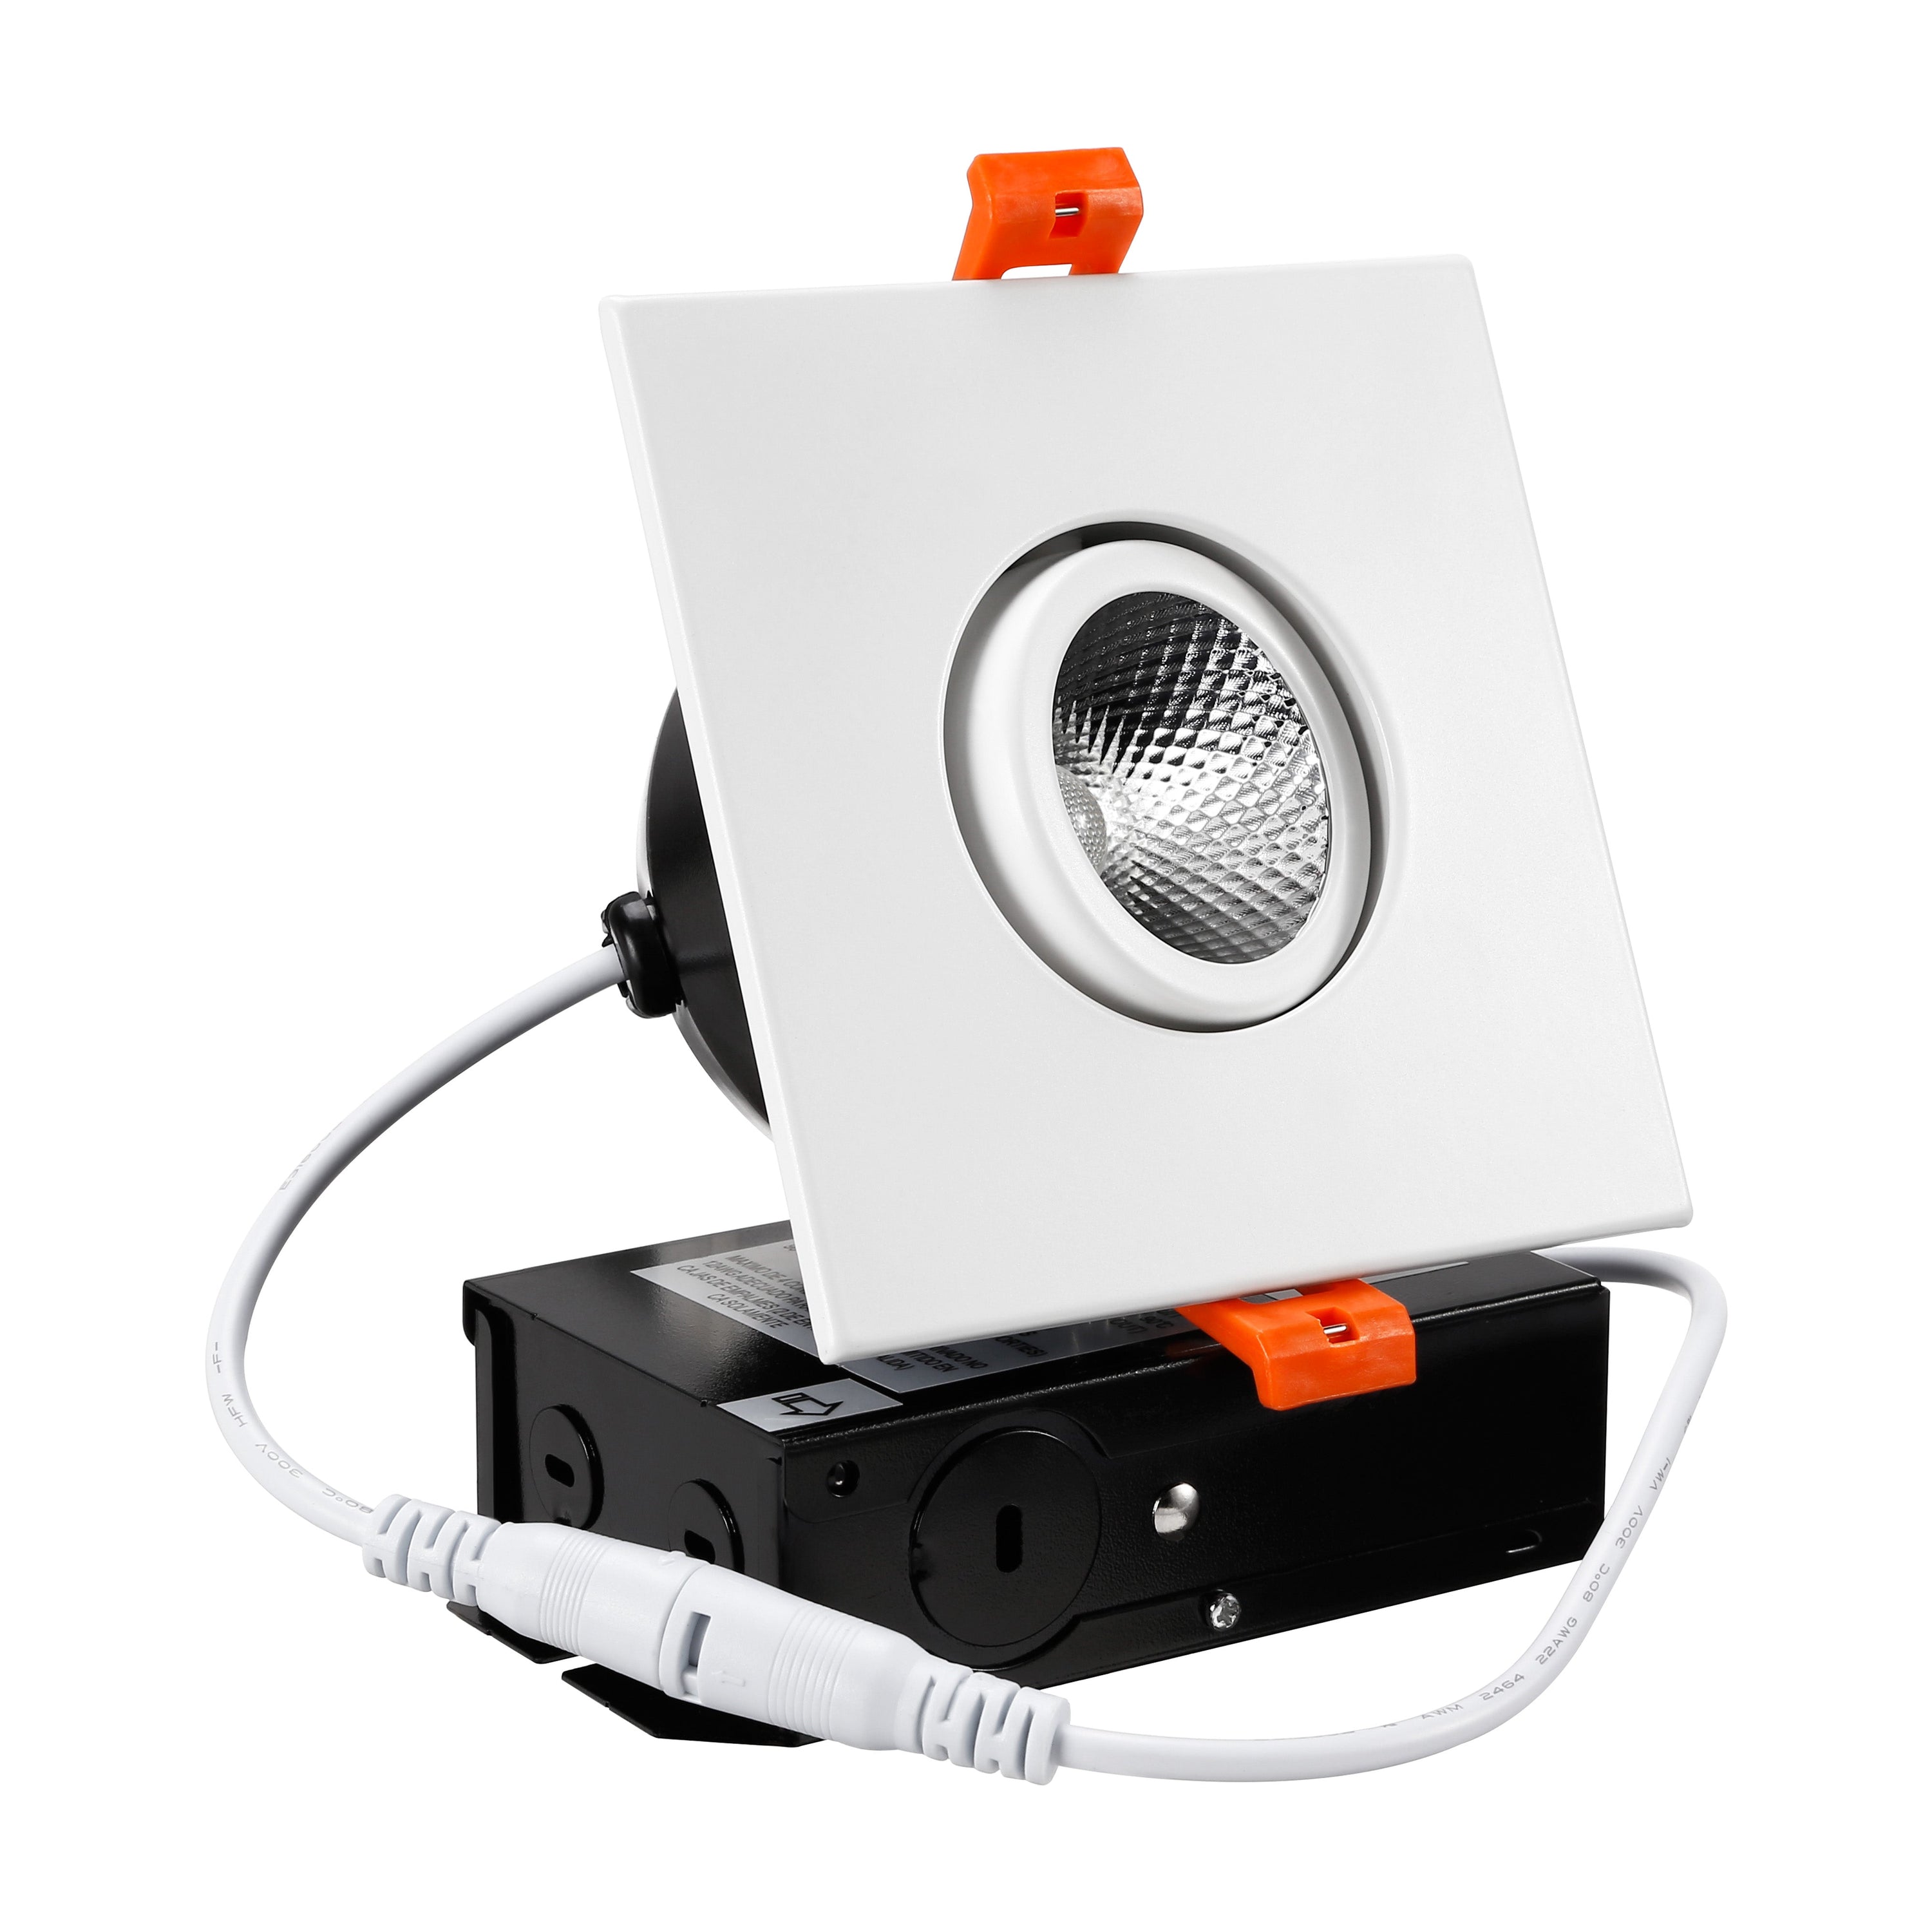 PivotSquare 3" Gimbal LED Recessed Light - White - 7W - Single CCT